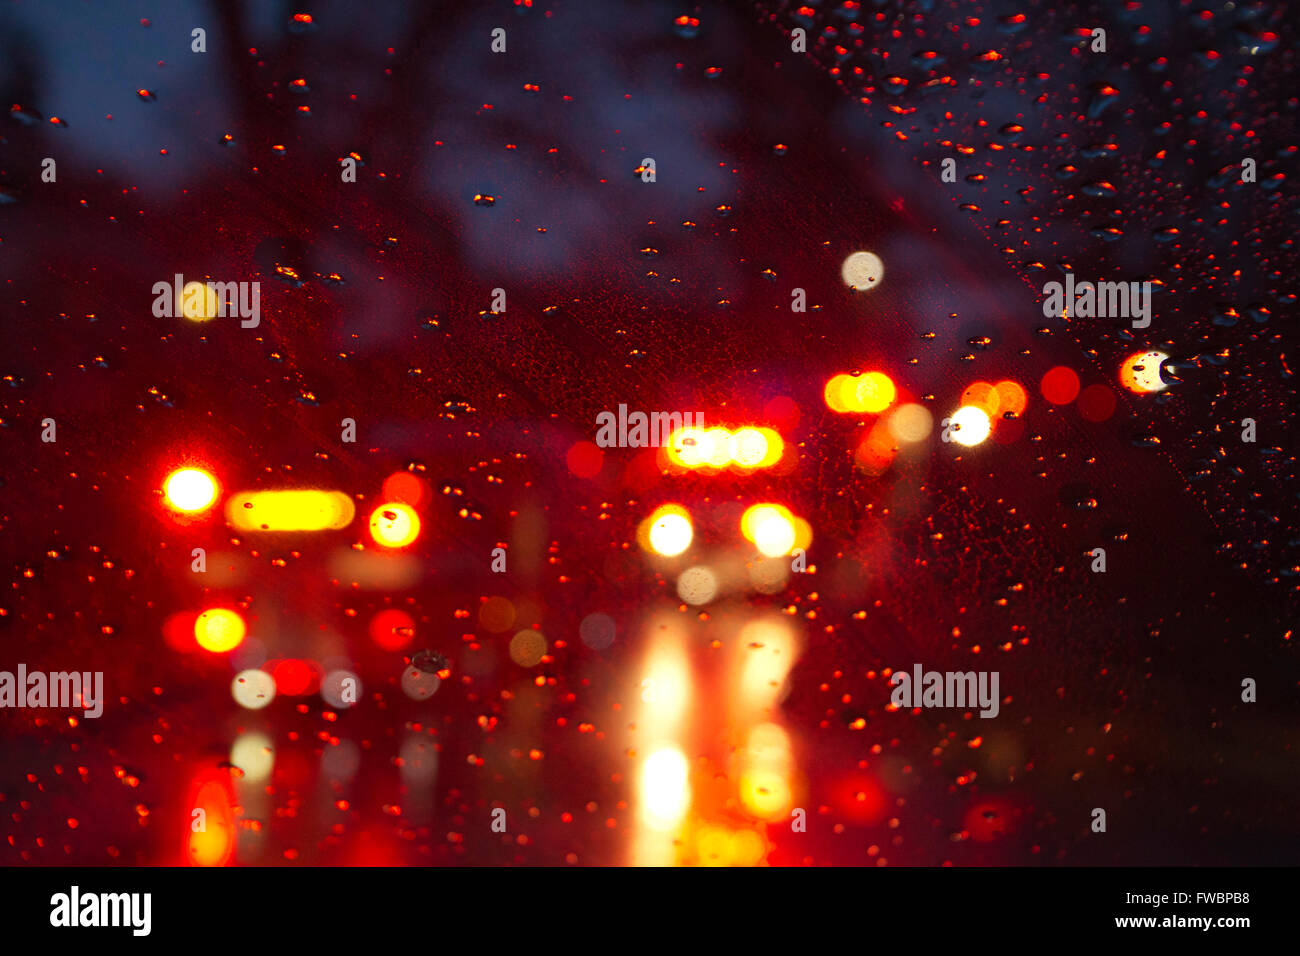 Luz de emergencia fotografías e imágenes de alta resolución - Alamy